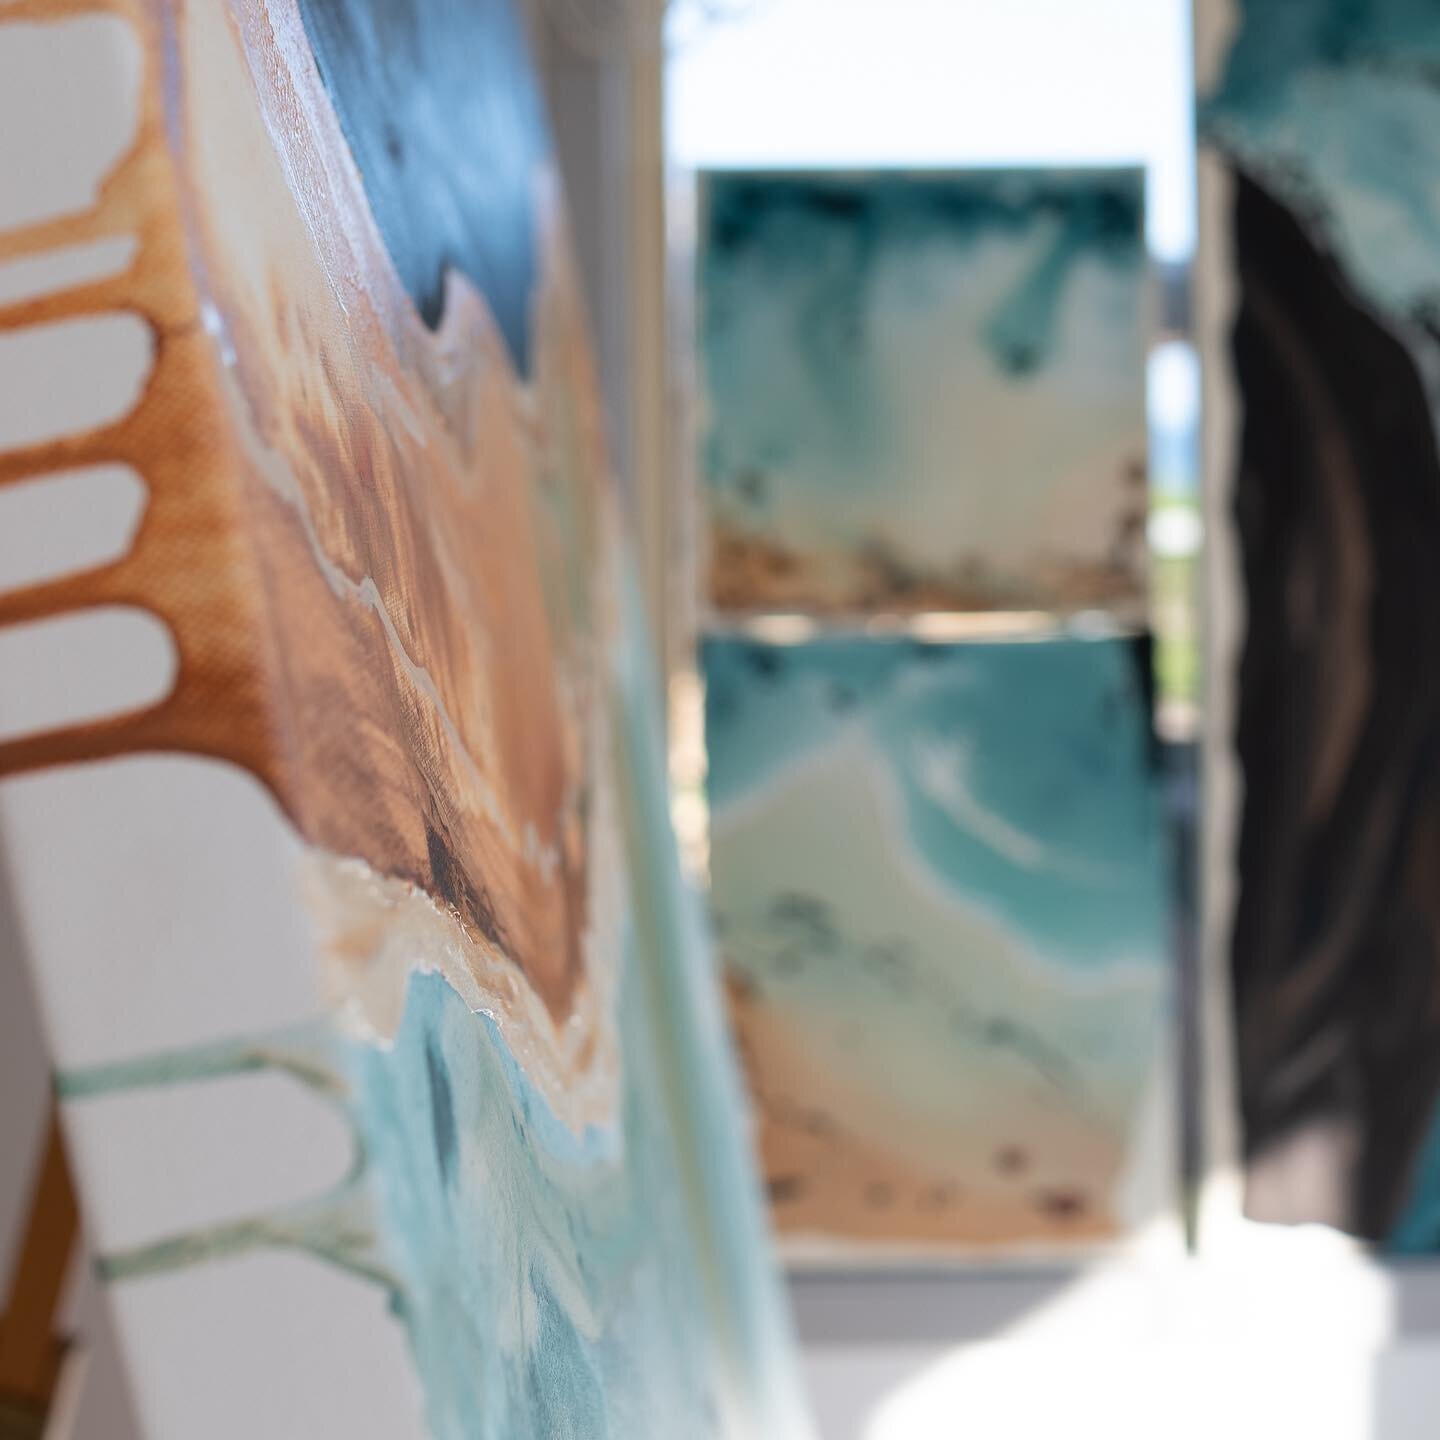 Sneak peek 
🌻🫶🏽🩵☀️🍃

#stateofflow #collection #series #fromabove #abstract #markmaking  #australianartist #watchthisspace #dronephotography #aerialphotography #aerialart #evolution #yuincountry #oceanvibes #artcollector #artcurator #interiordesi